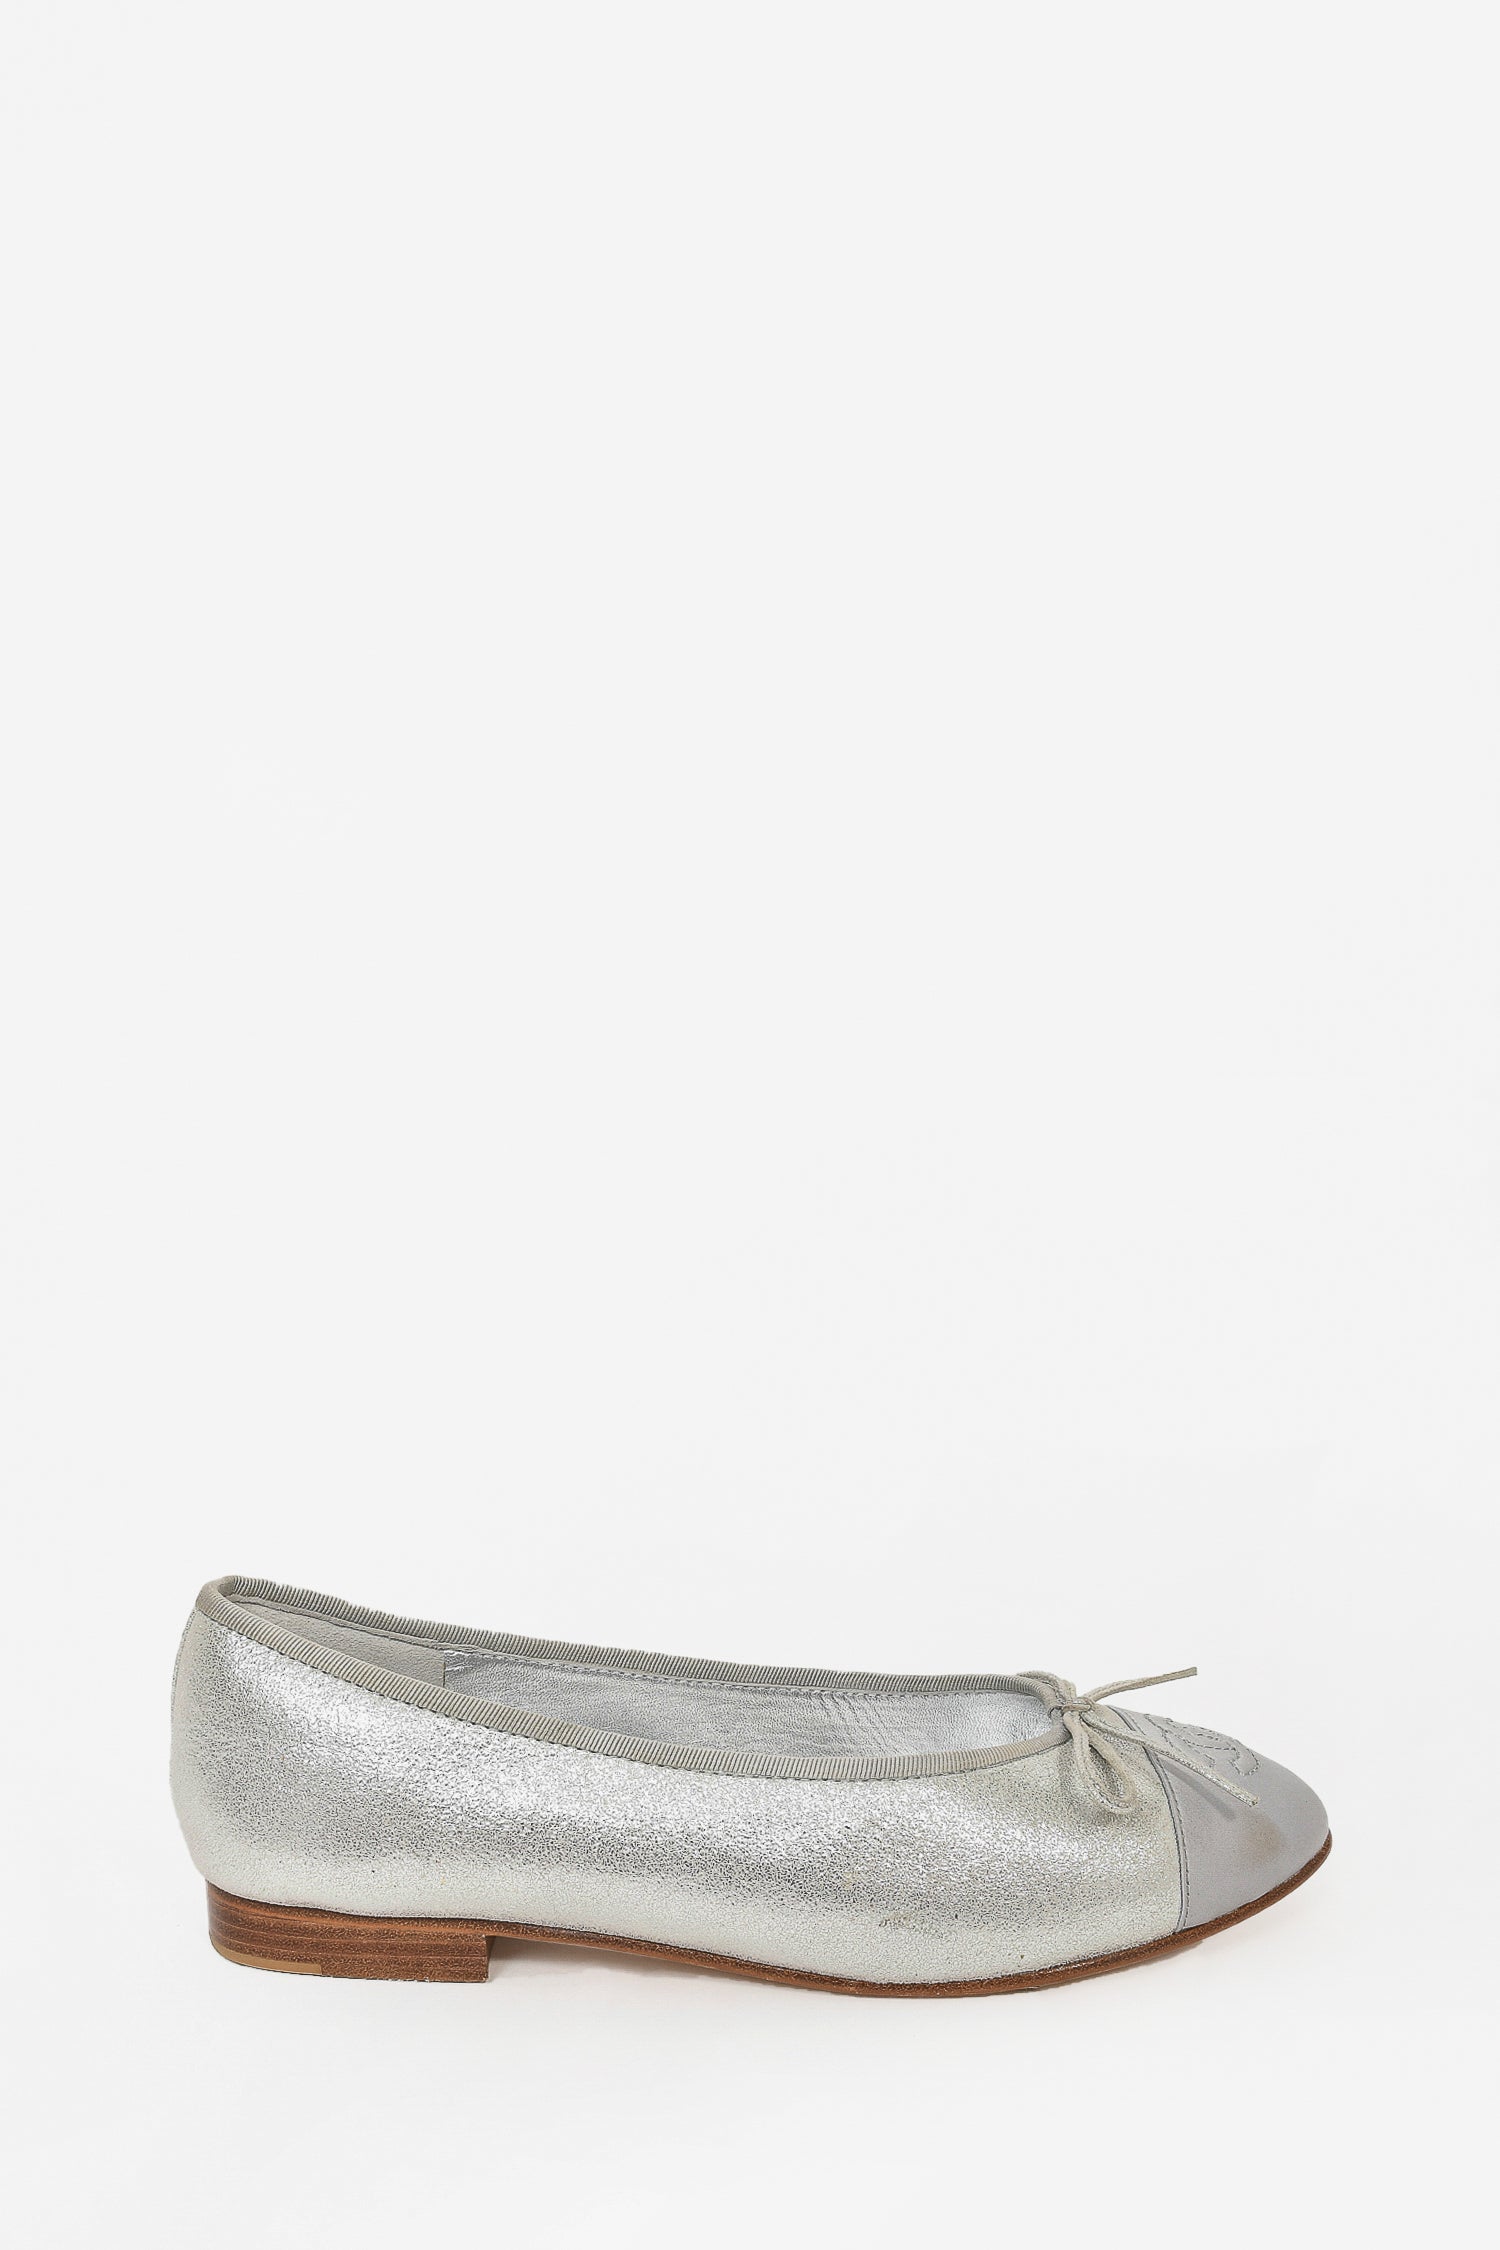 CHANEL, Shoes, Metallic Silver Chanel Ballerina Flats Size 38